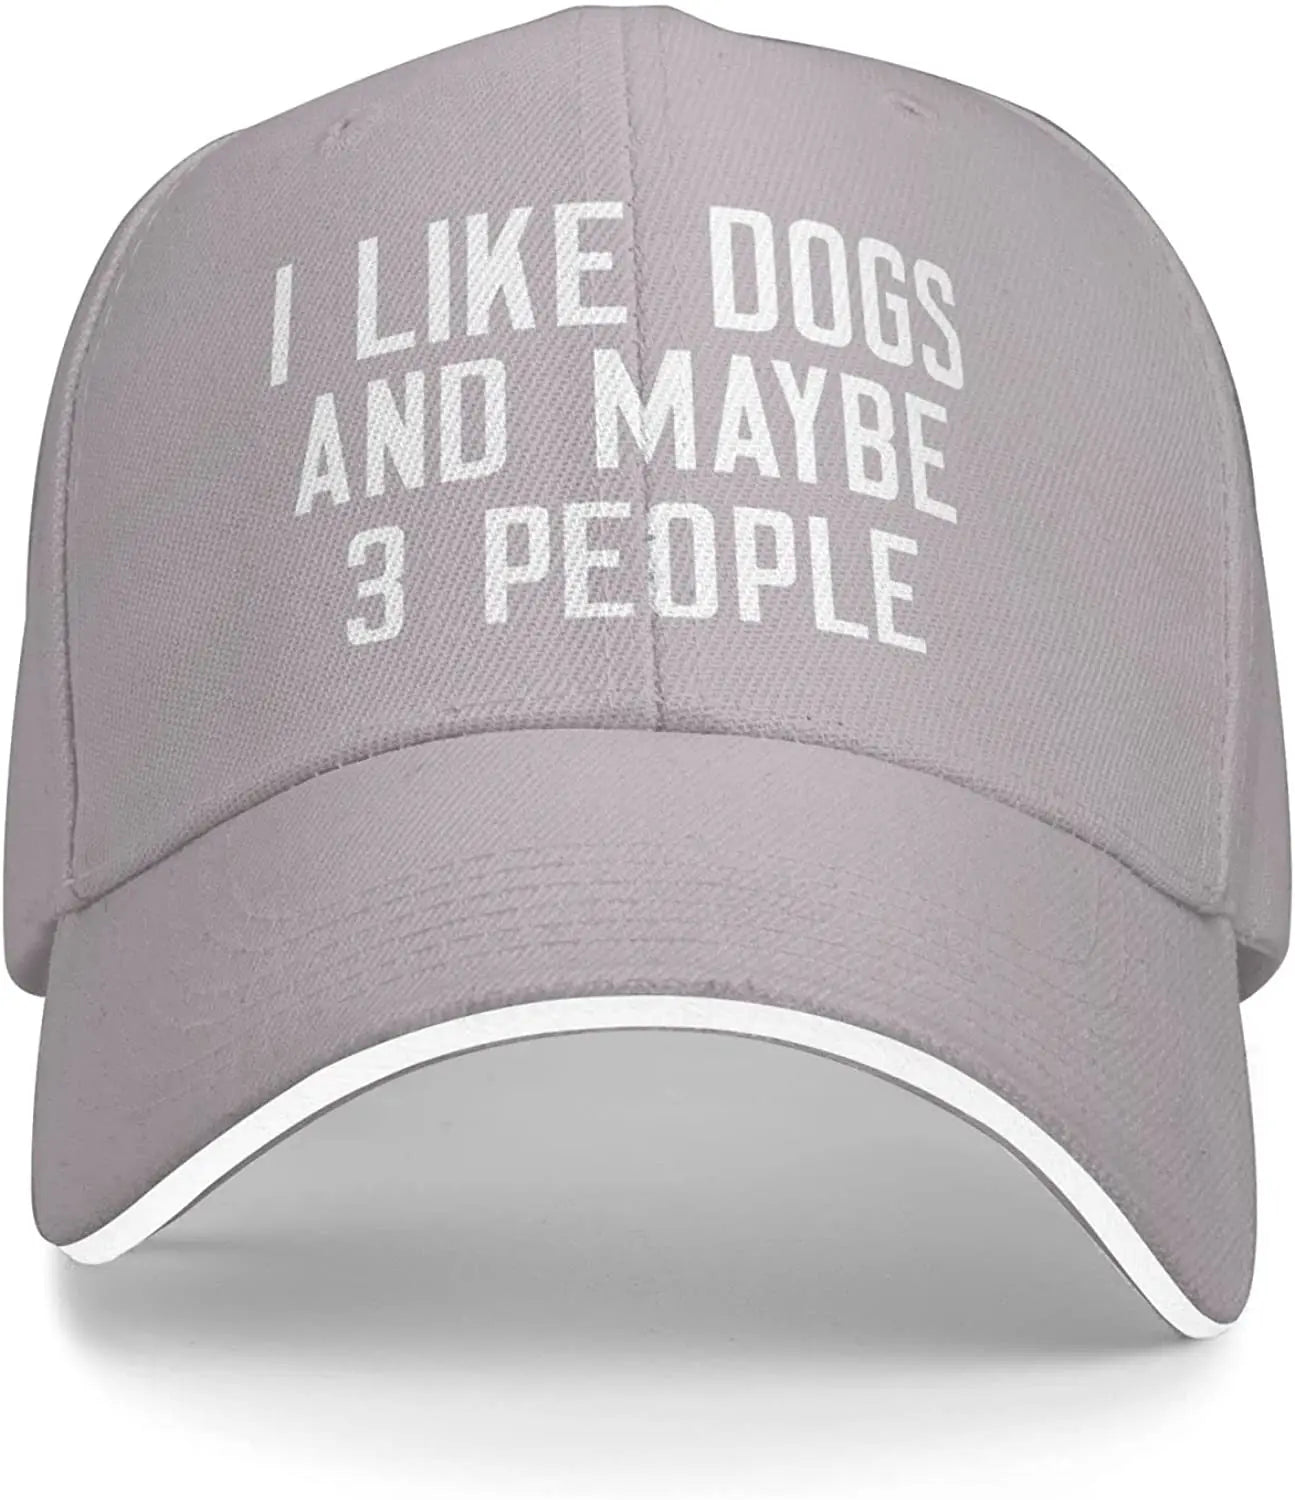 I Like Dogs and Maybe 3 People Unisex Cap Fishing Outdoor Sport Baseball Cap Sun Hat - Lizard Vigilante